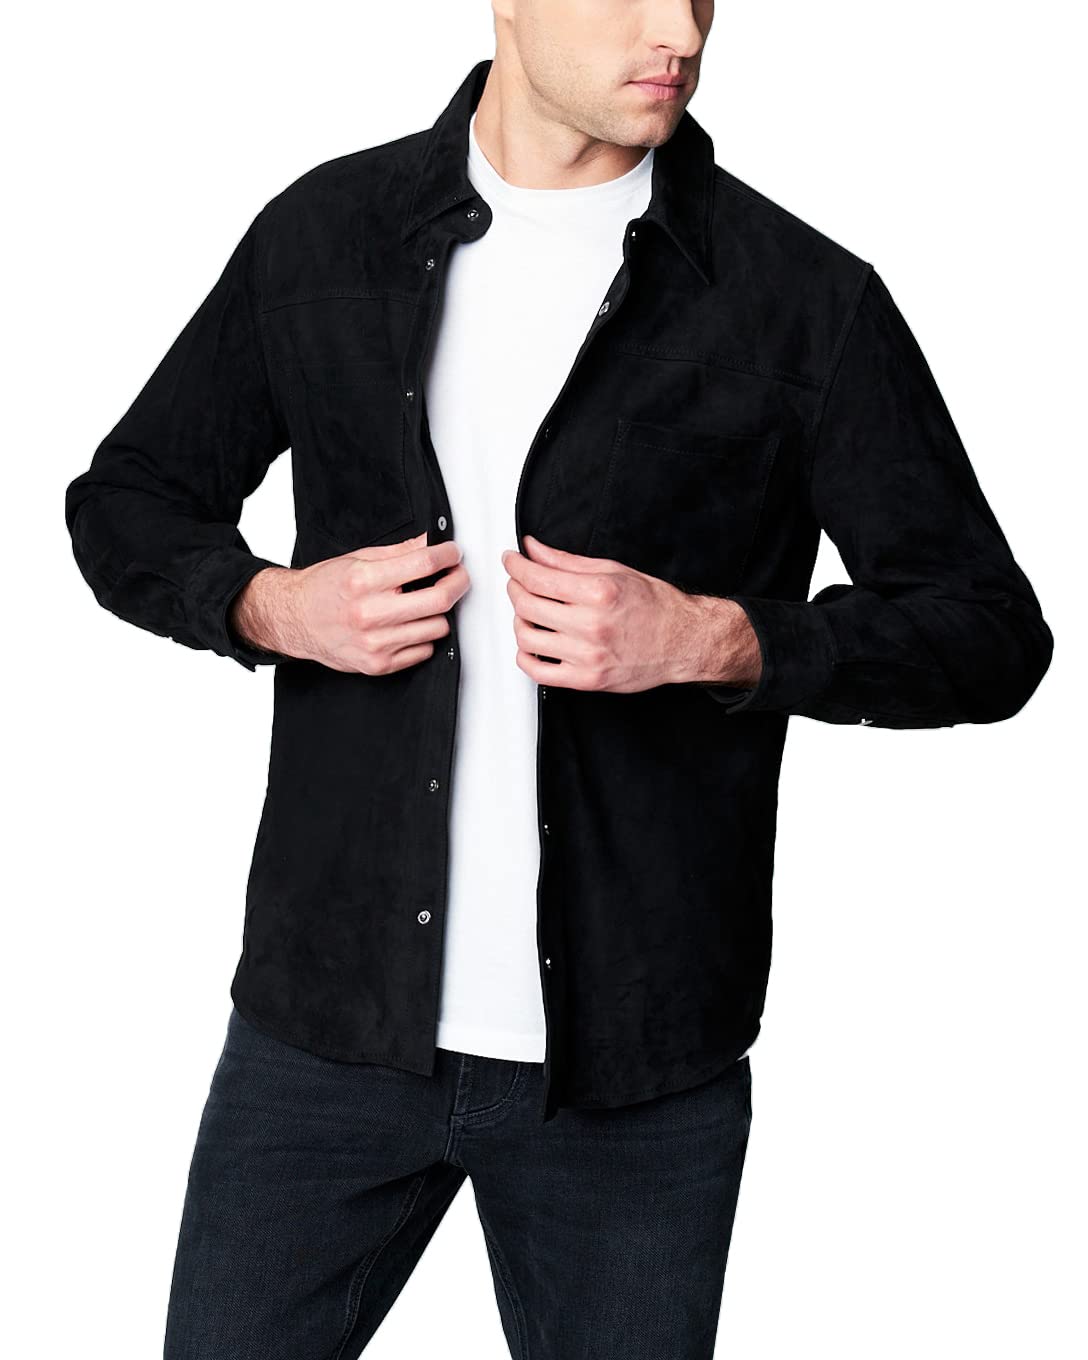 [BLANKNYC] mens Luxury Clothing Suede Shirt Jacket, Comfortable & Stylish Shacket